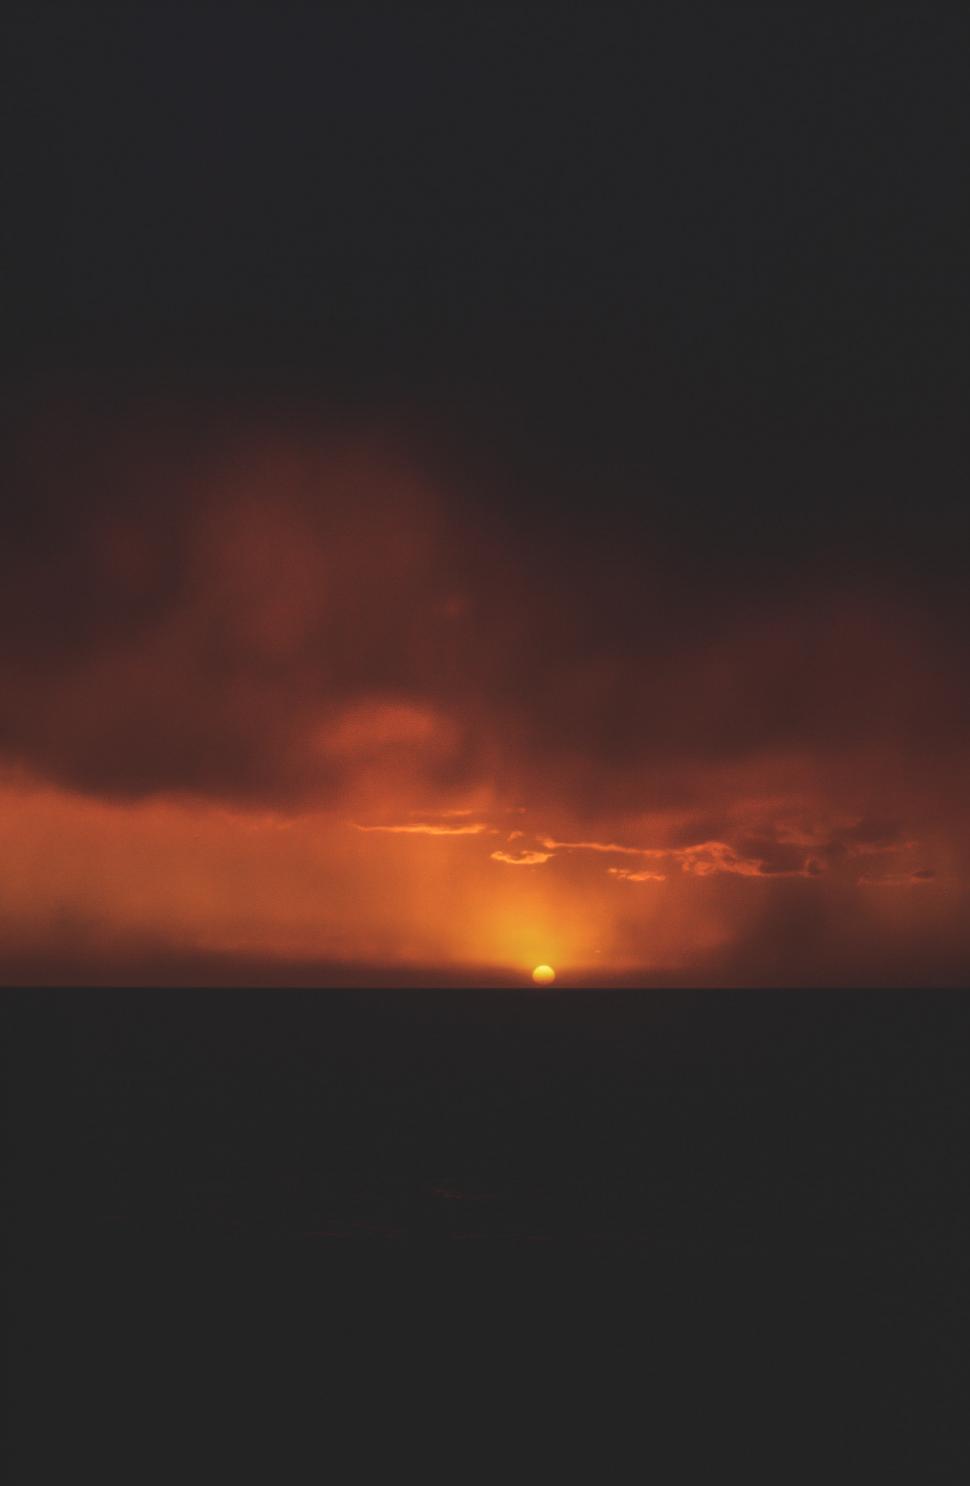 Free Image of Dramatic Sunset on Horizon - Dark Skies 